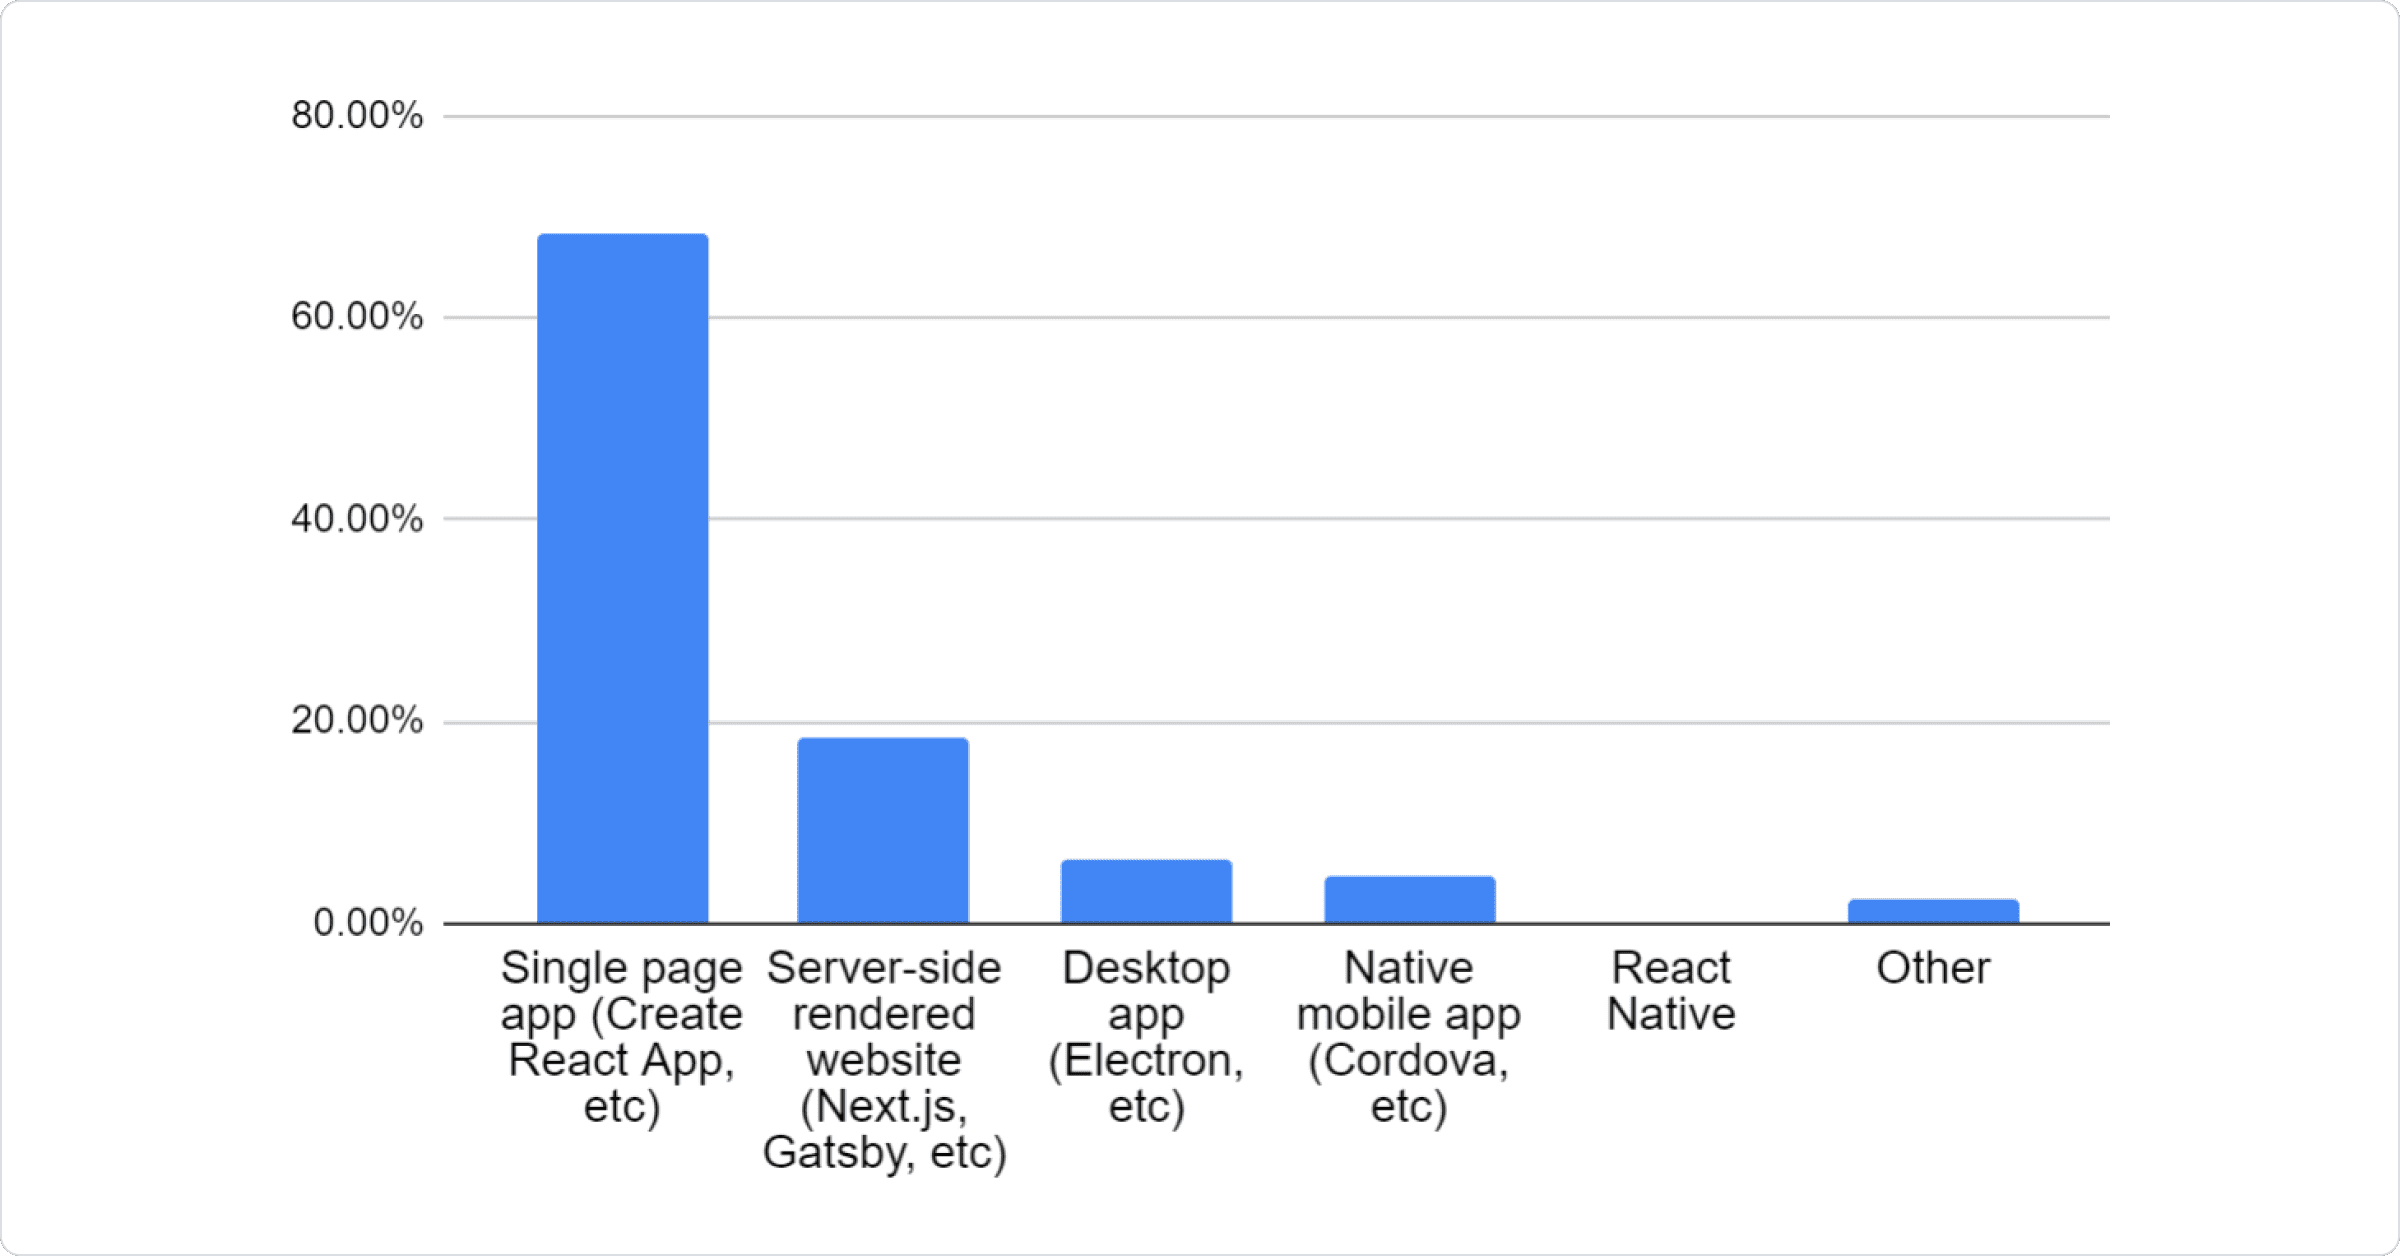 Bar chart: 68.37% Single page app (Create React App, etc), 18.24% Server-side rendered website (Next.js, Gatsby, etc), 6.22% Desktop app (Electron, etc), 4.65% Native mobile app (Cordova, etc), 0.10% React Native, 2.40% Other